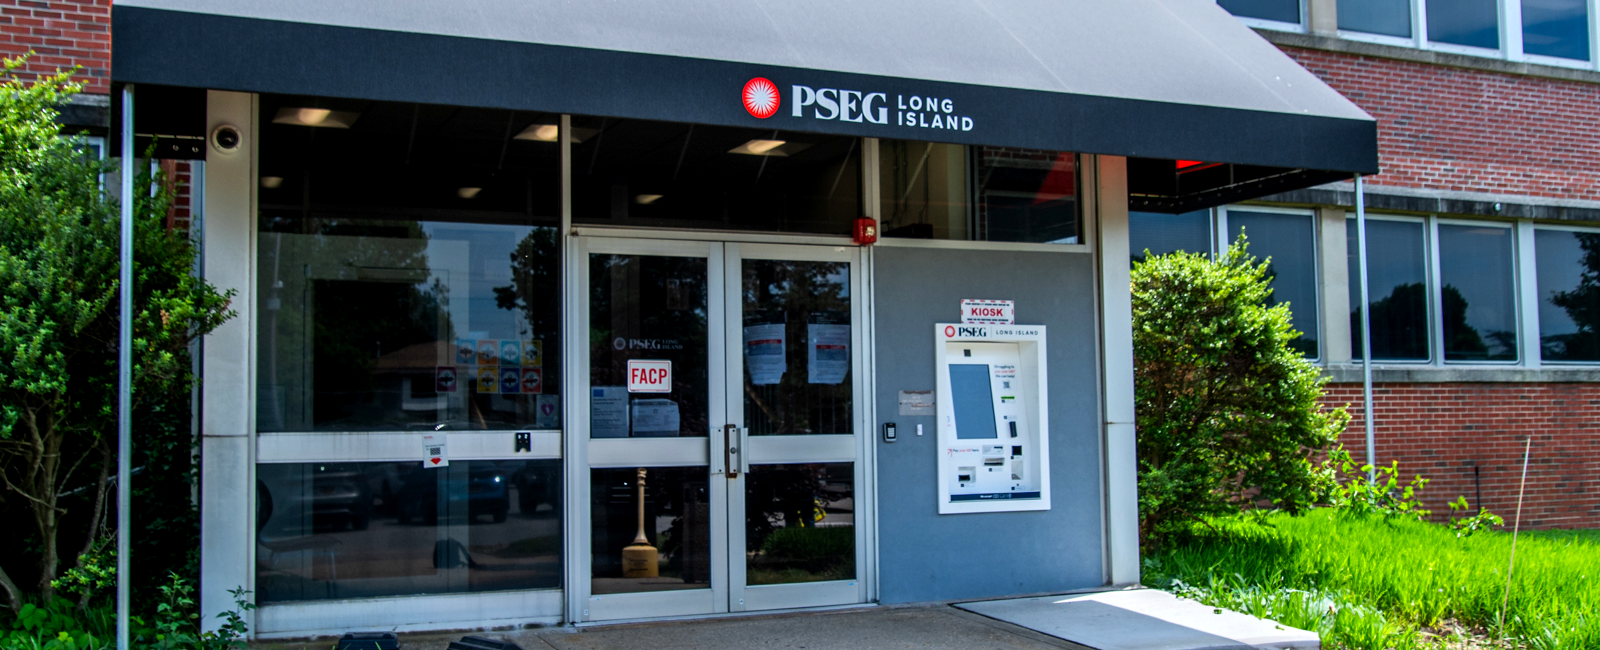 PSEG Long Island Payment Kiosk